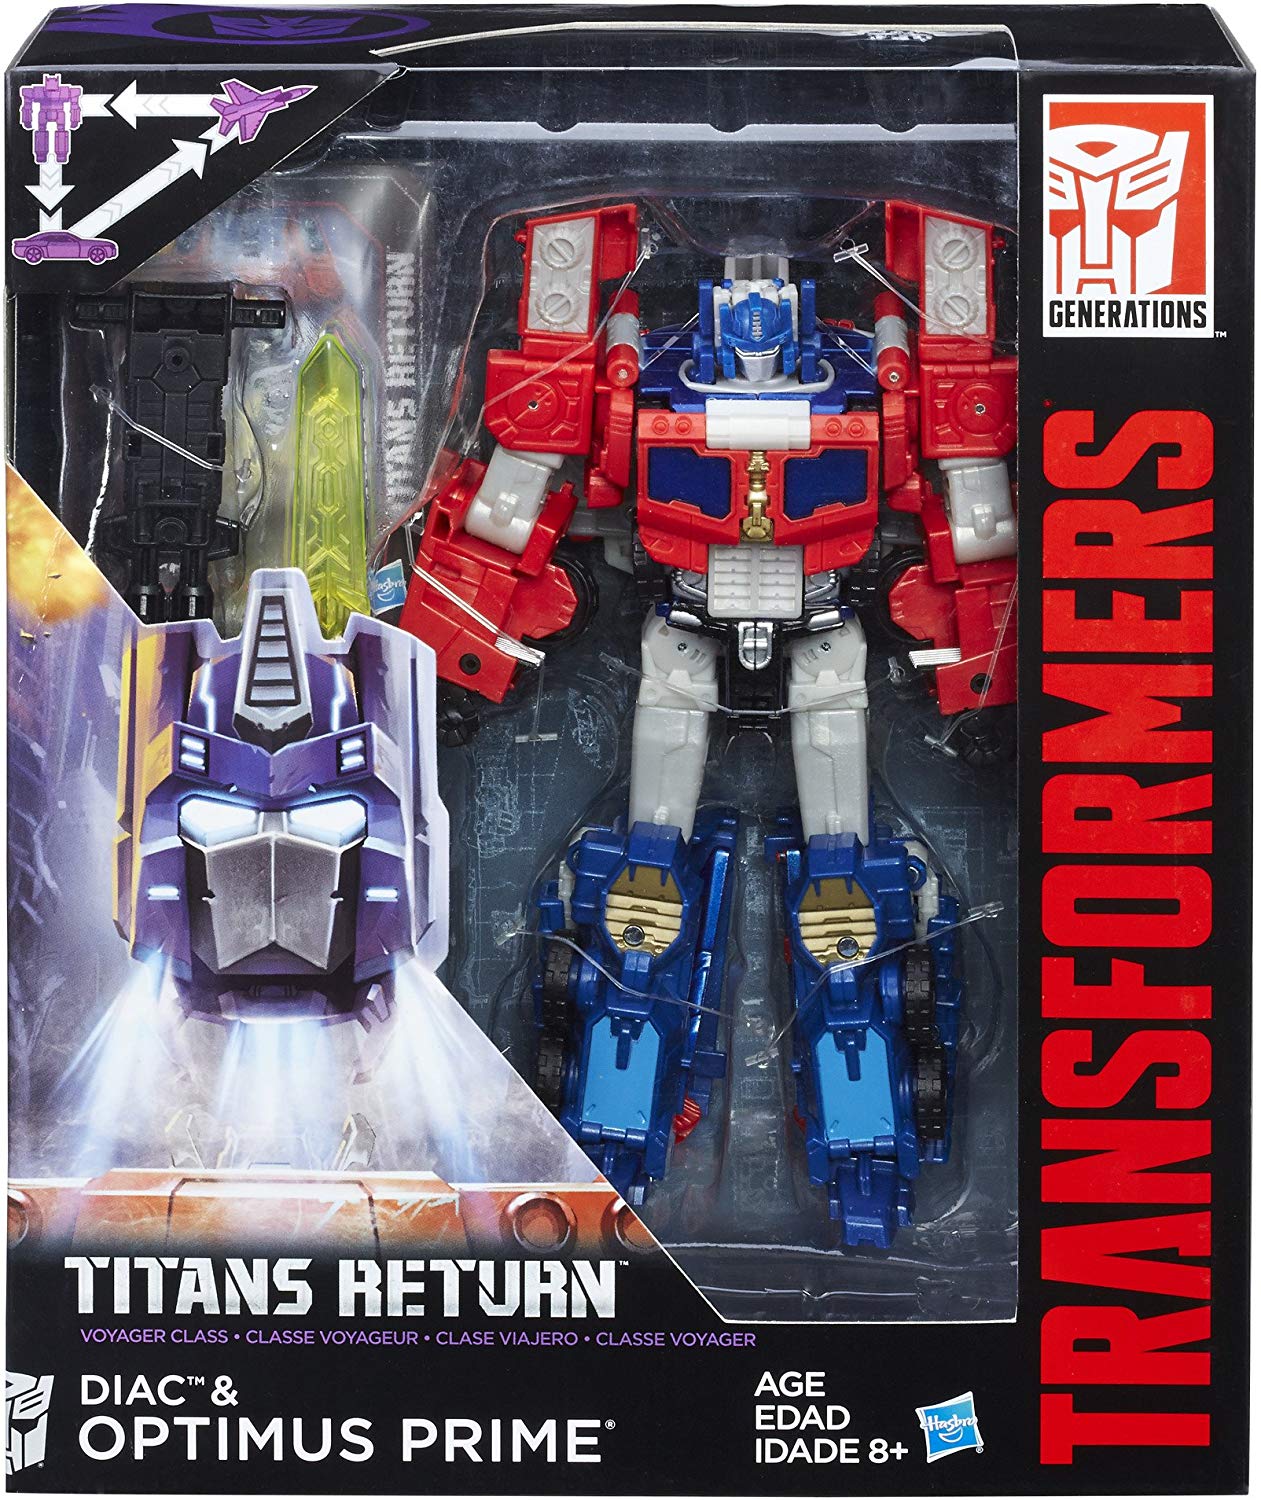 Transformers Generations Titans Return Voyager Class Optimus Prime Action Figure 1